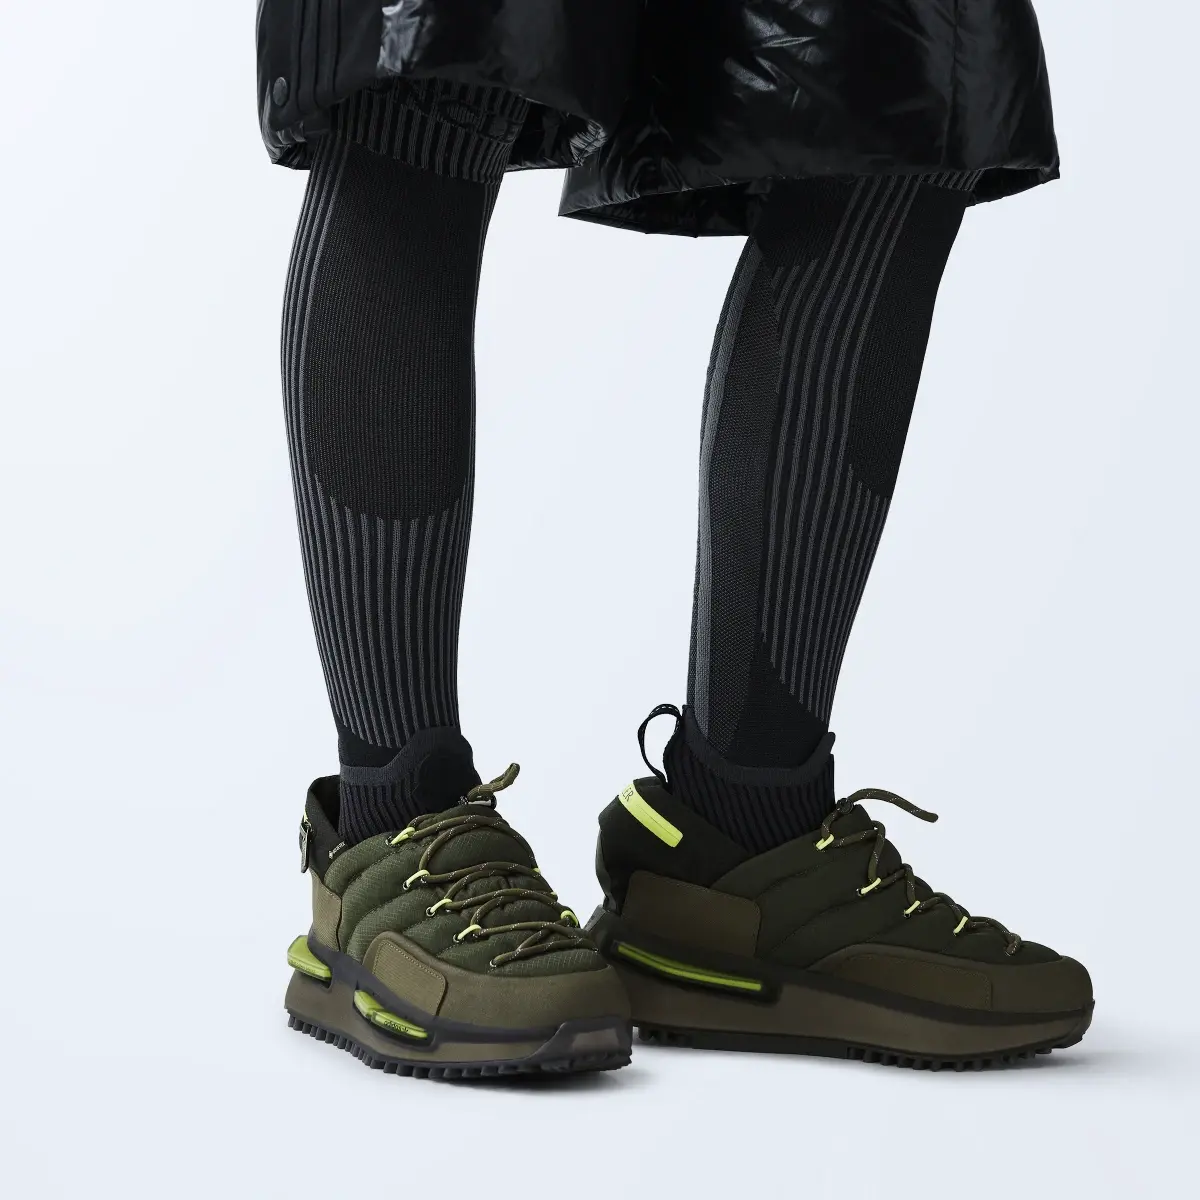 Adidas Moncler x adidas Originals NMD Runner Shoes. 2